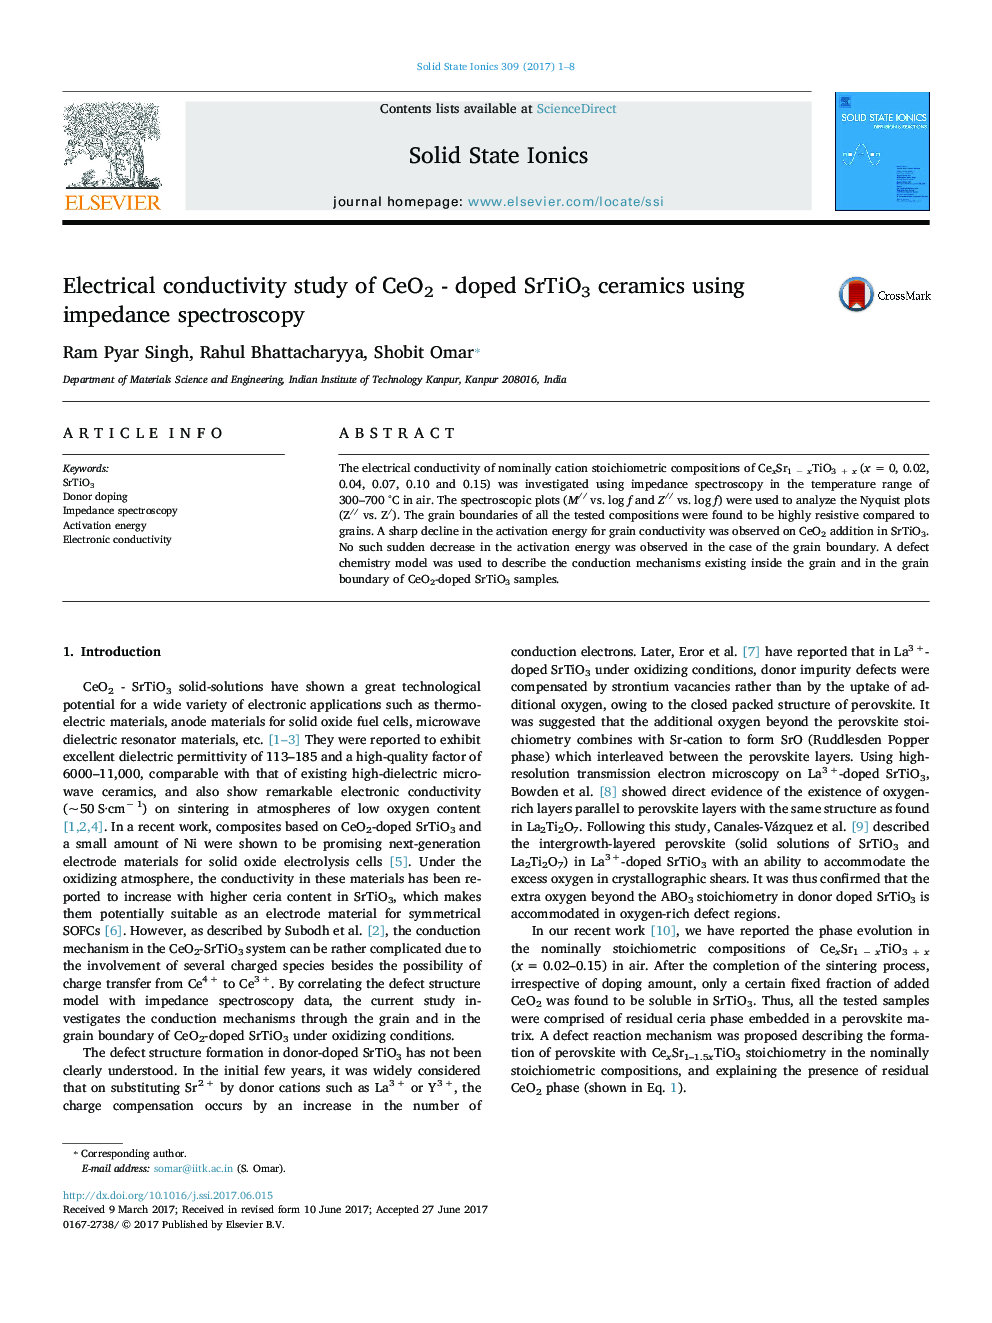 Electrical conductivity study of CeO2 - doped SrTiO3 ceramics using impedance spectroscopy